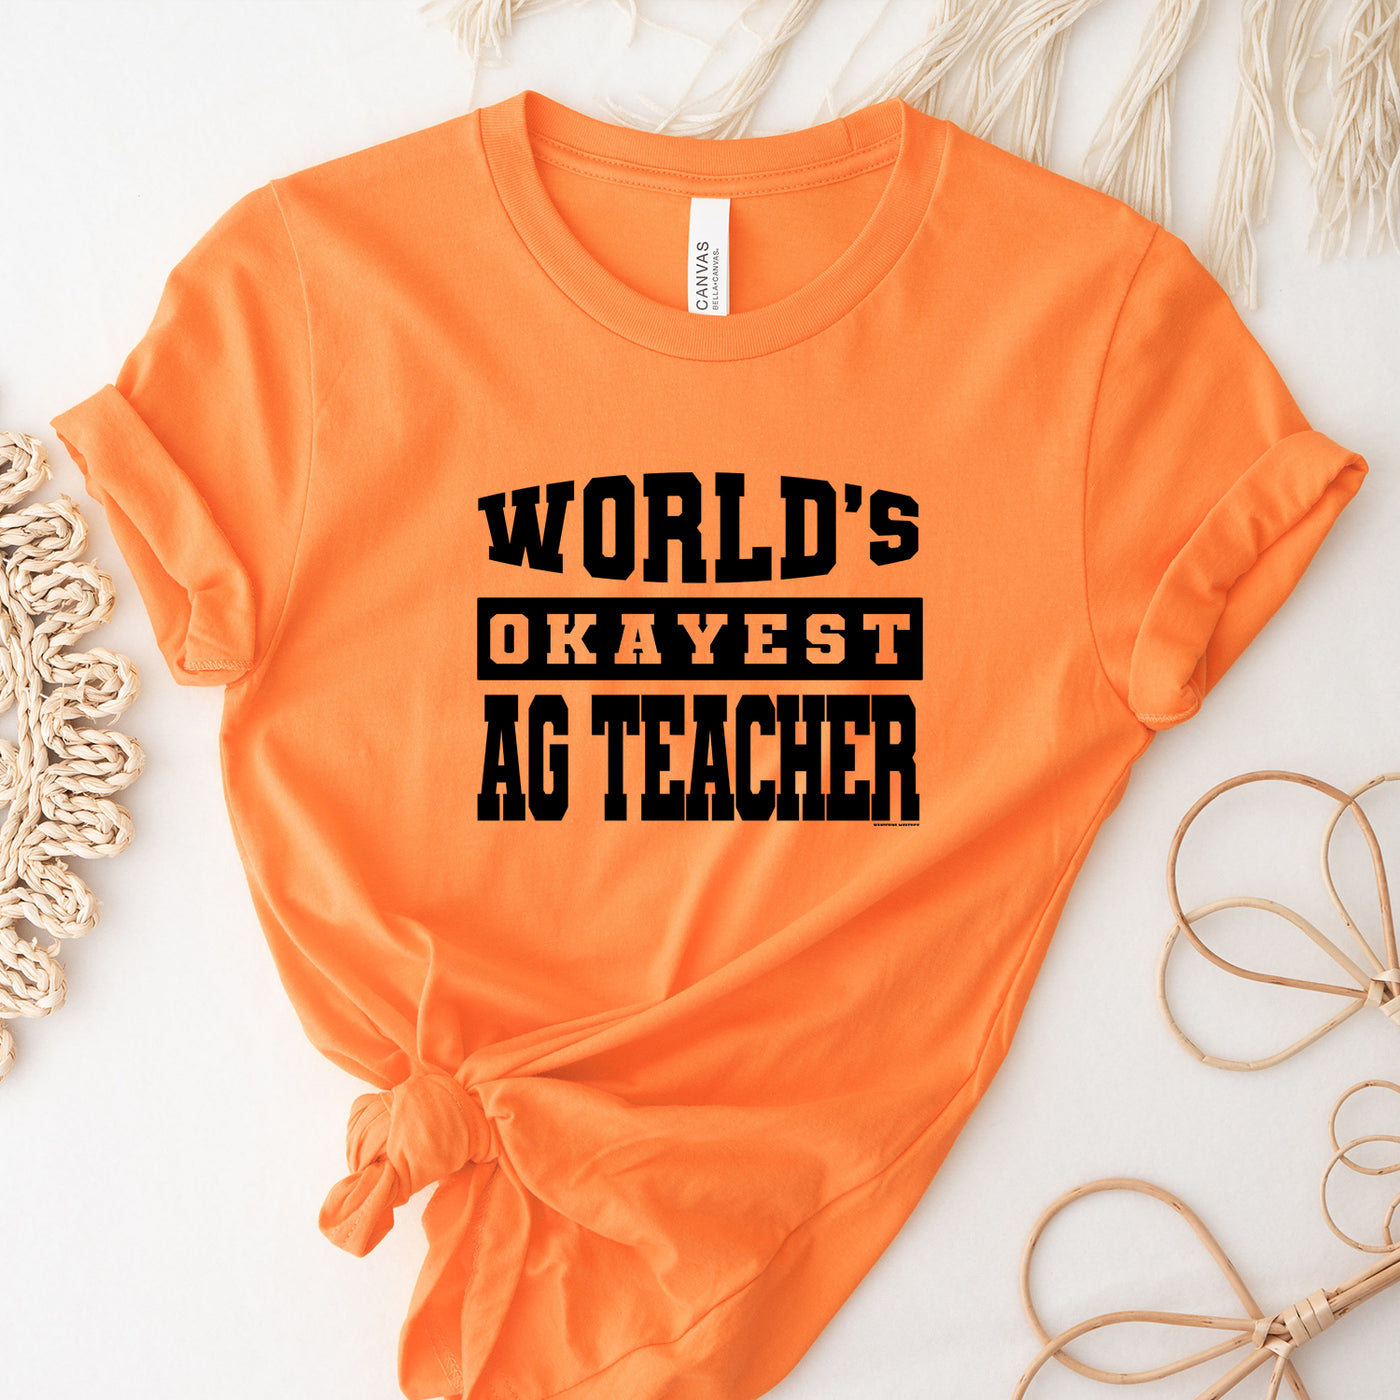 World's Okayest Ag Teacher T-Shirt (XS-4XL) - Multiple Colors!